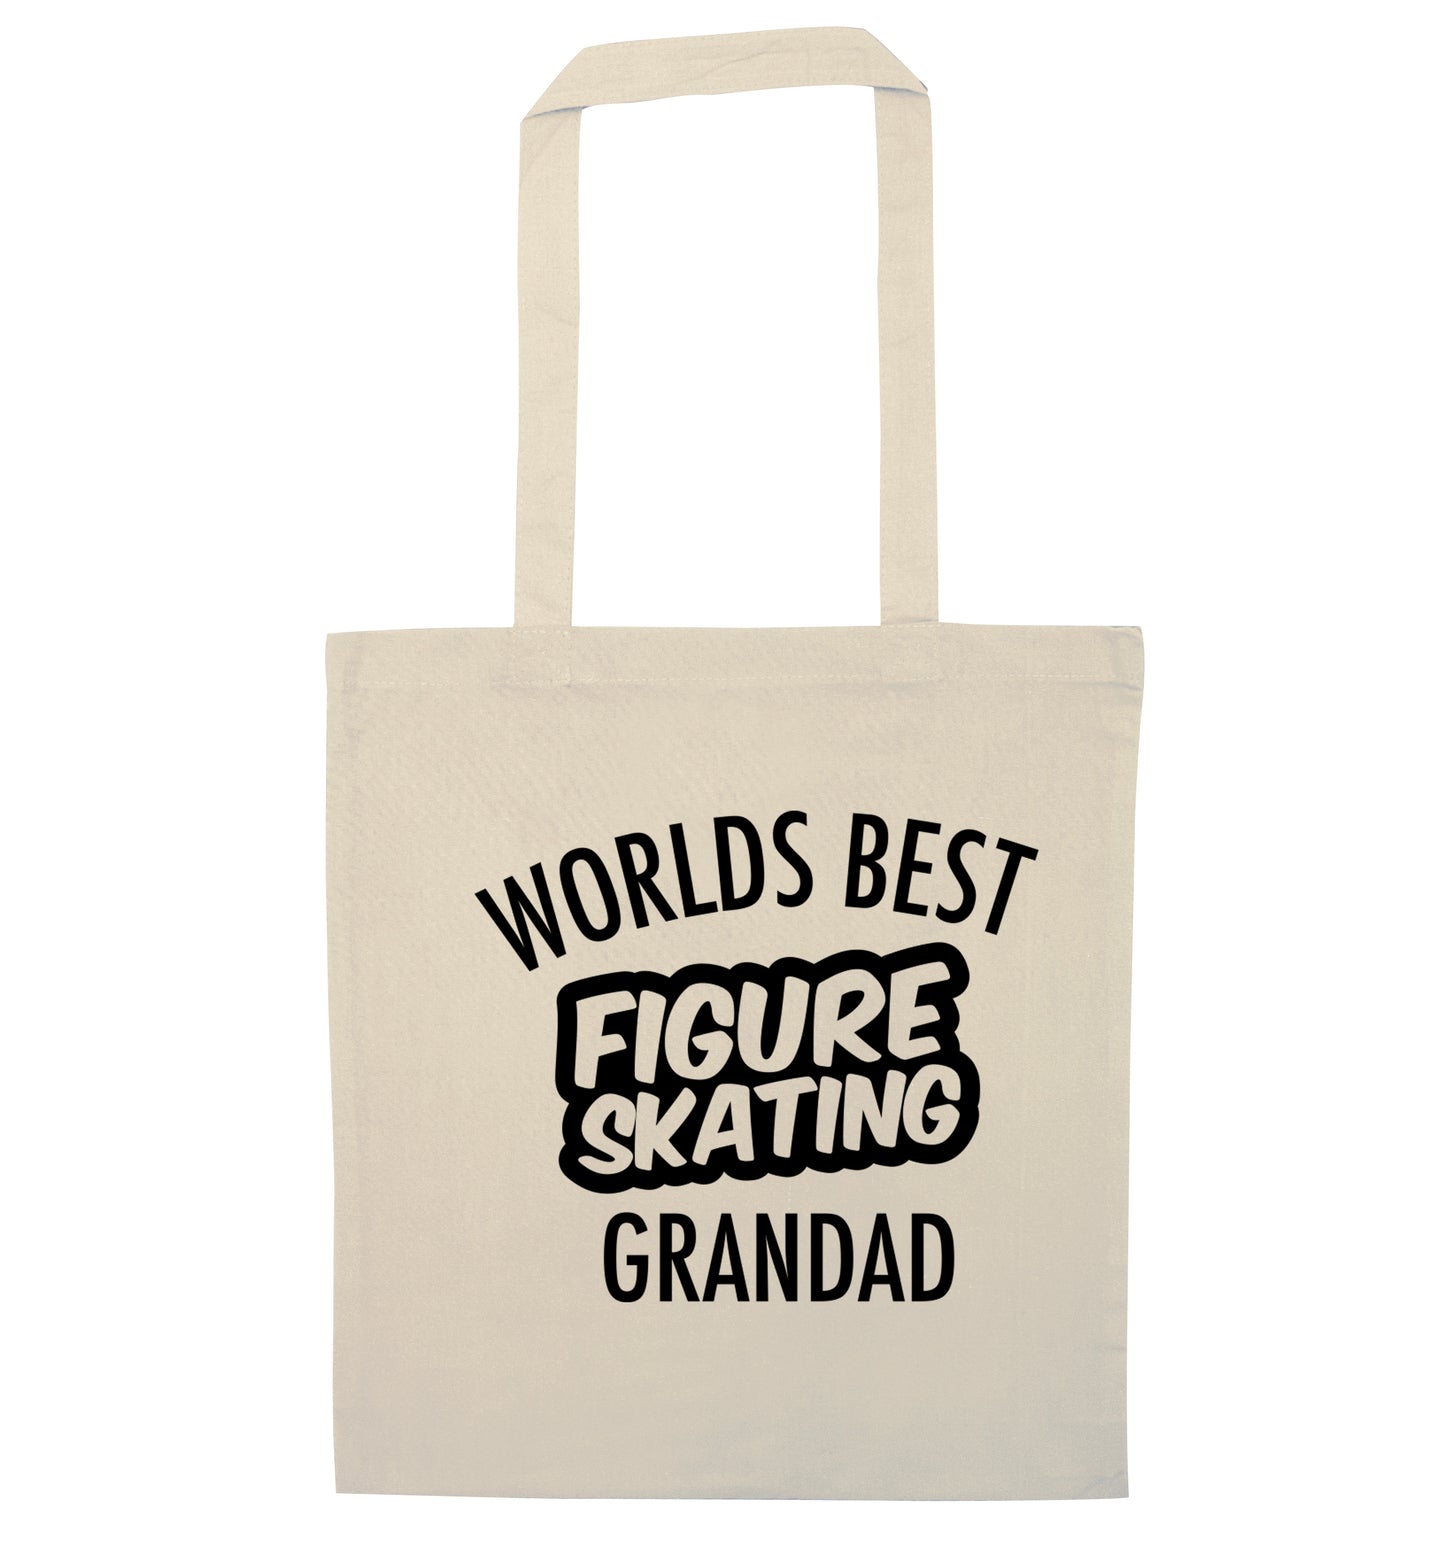 Worlds best figure skating grandad natural tote bag